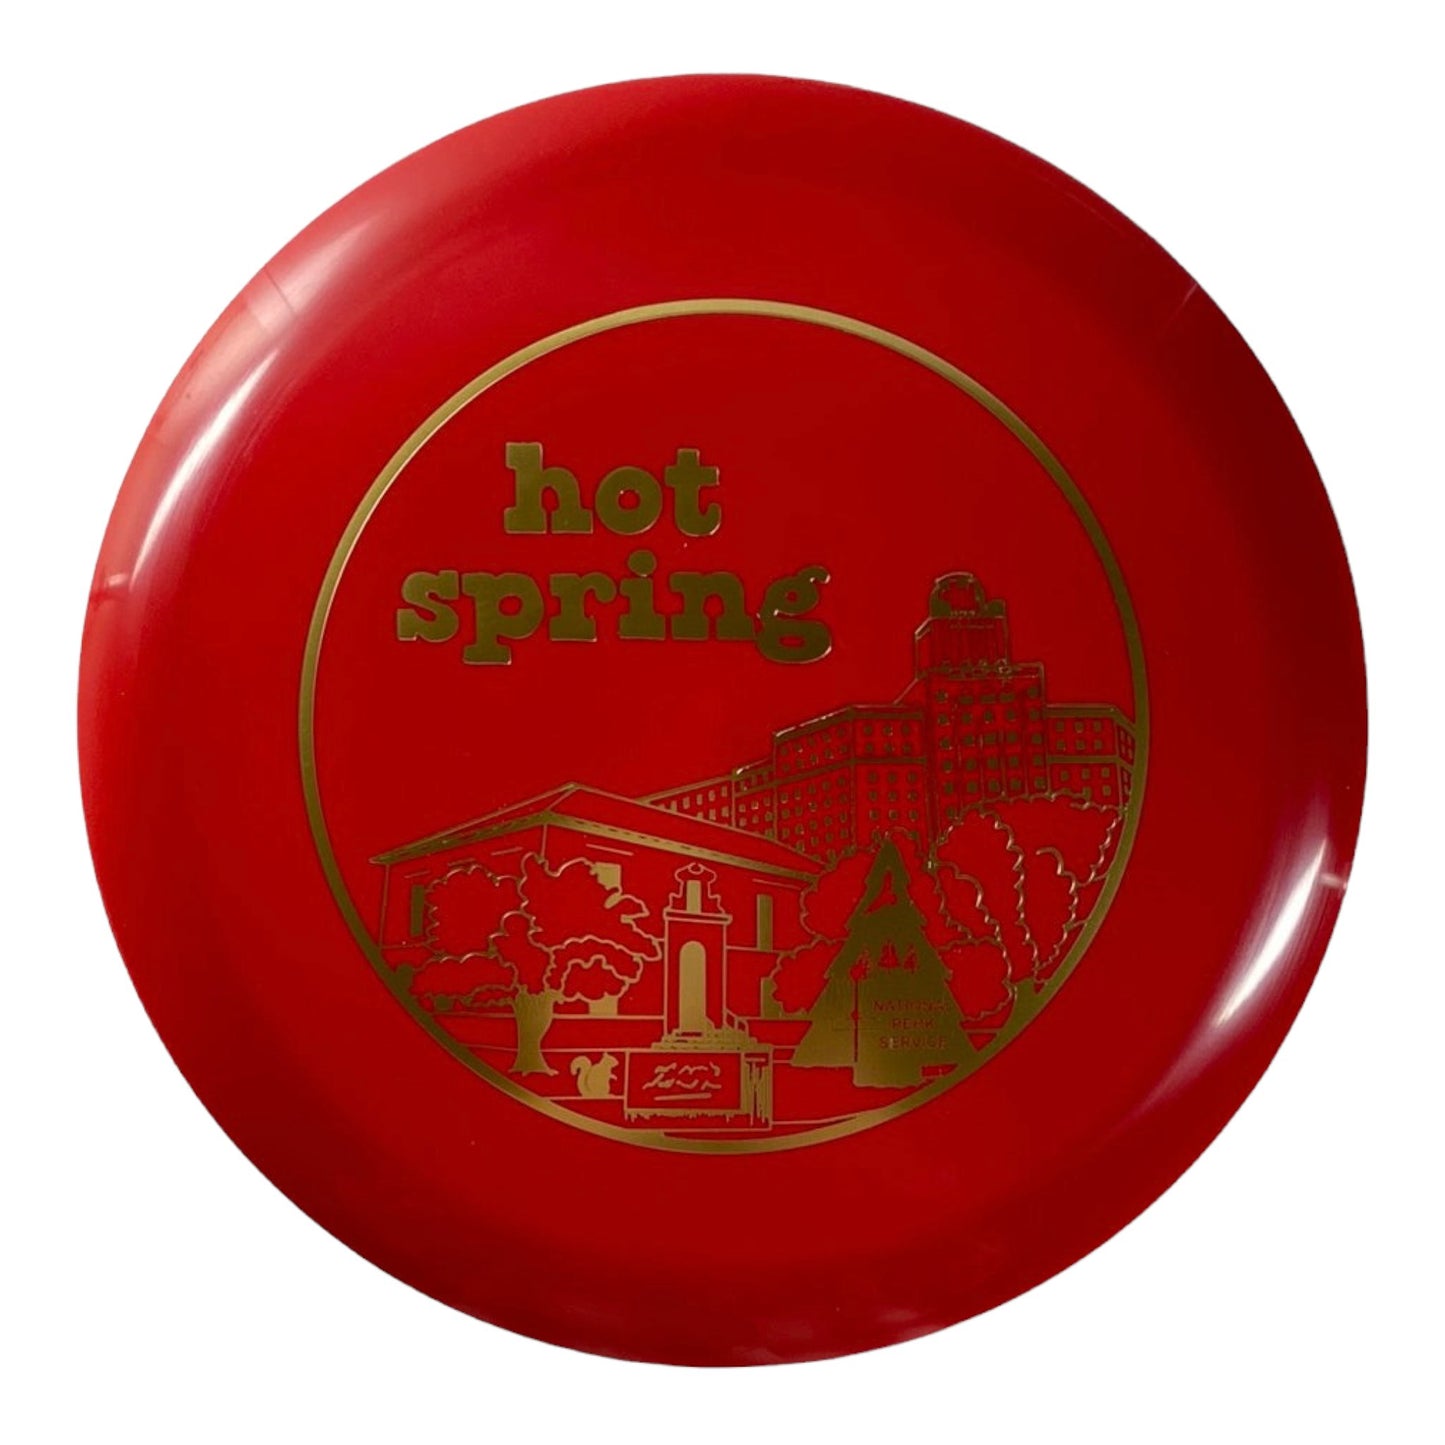 Innova Champion Discs Hot Spring - Roadrunner | Star | Red/Gold 175g (First Run) 25/50 Disc Golf